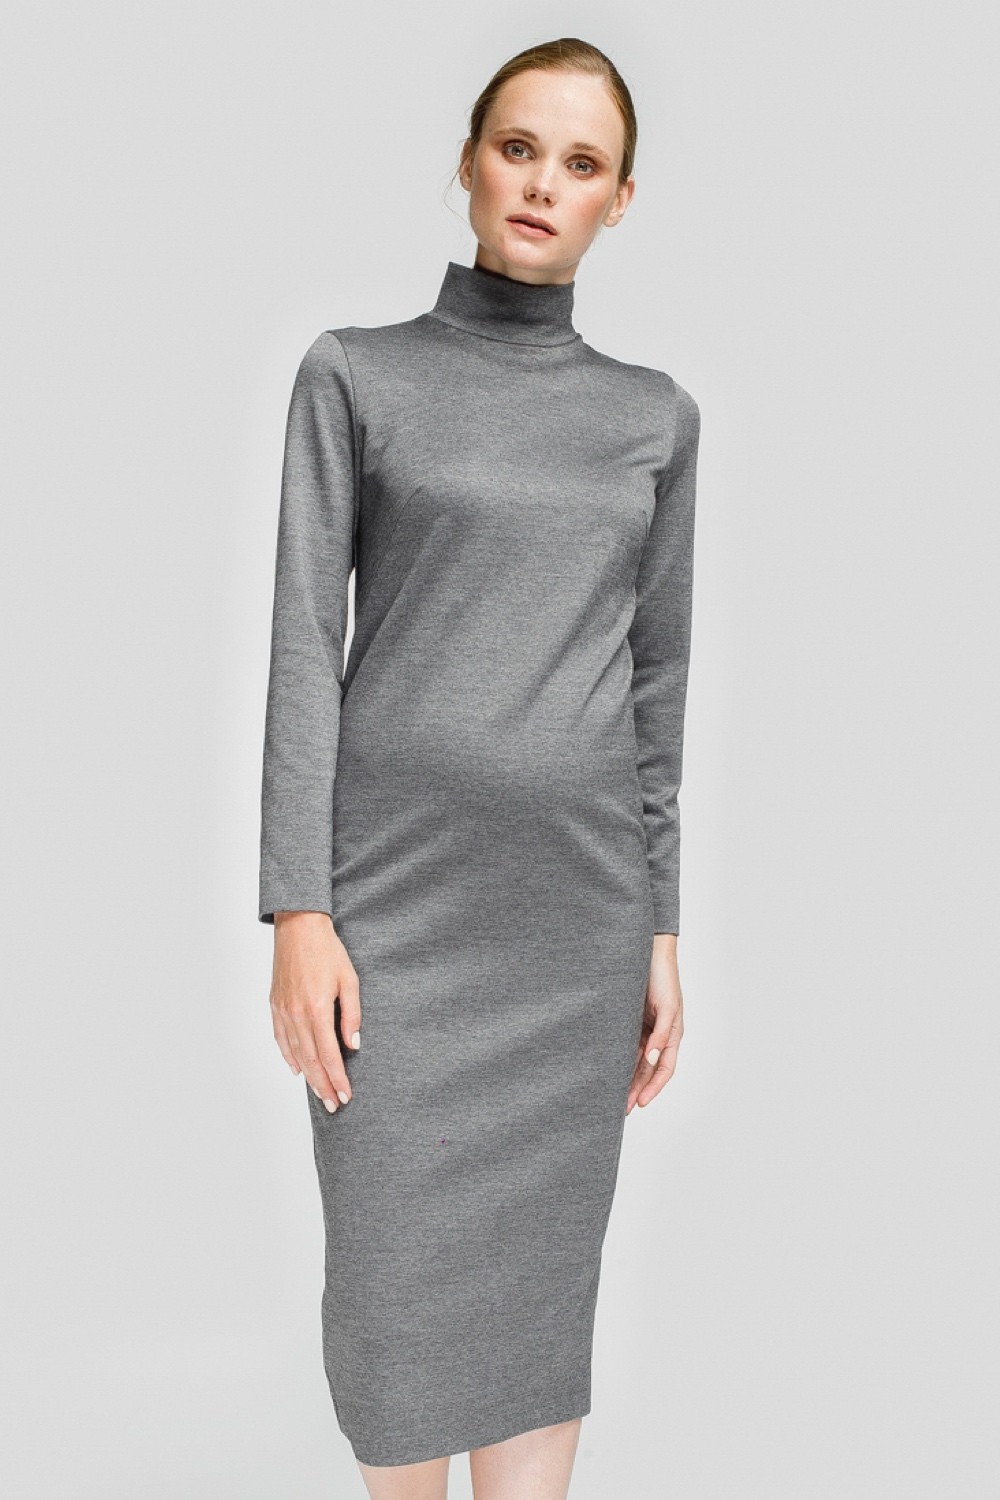 Gray sheath maternity-friendly midi dress